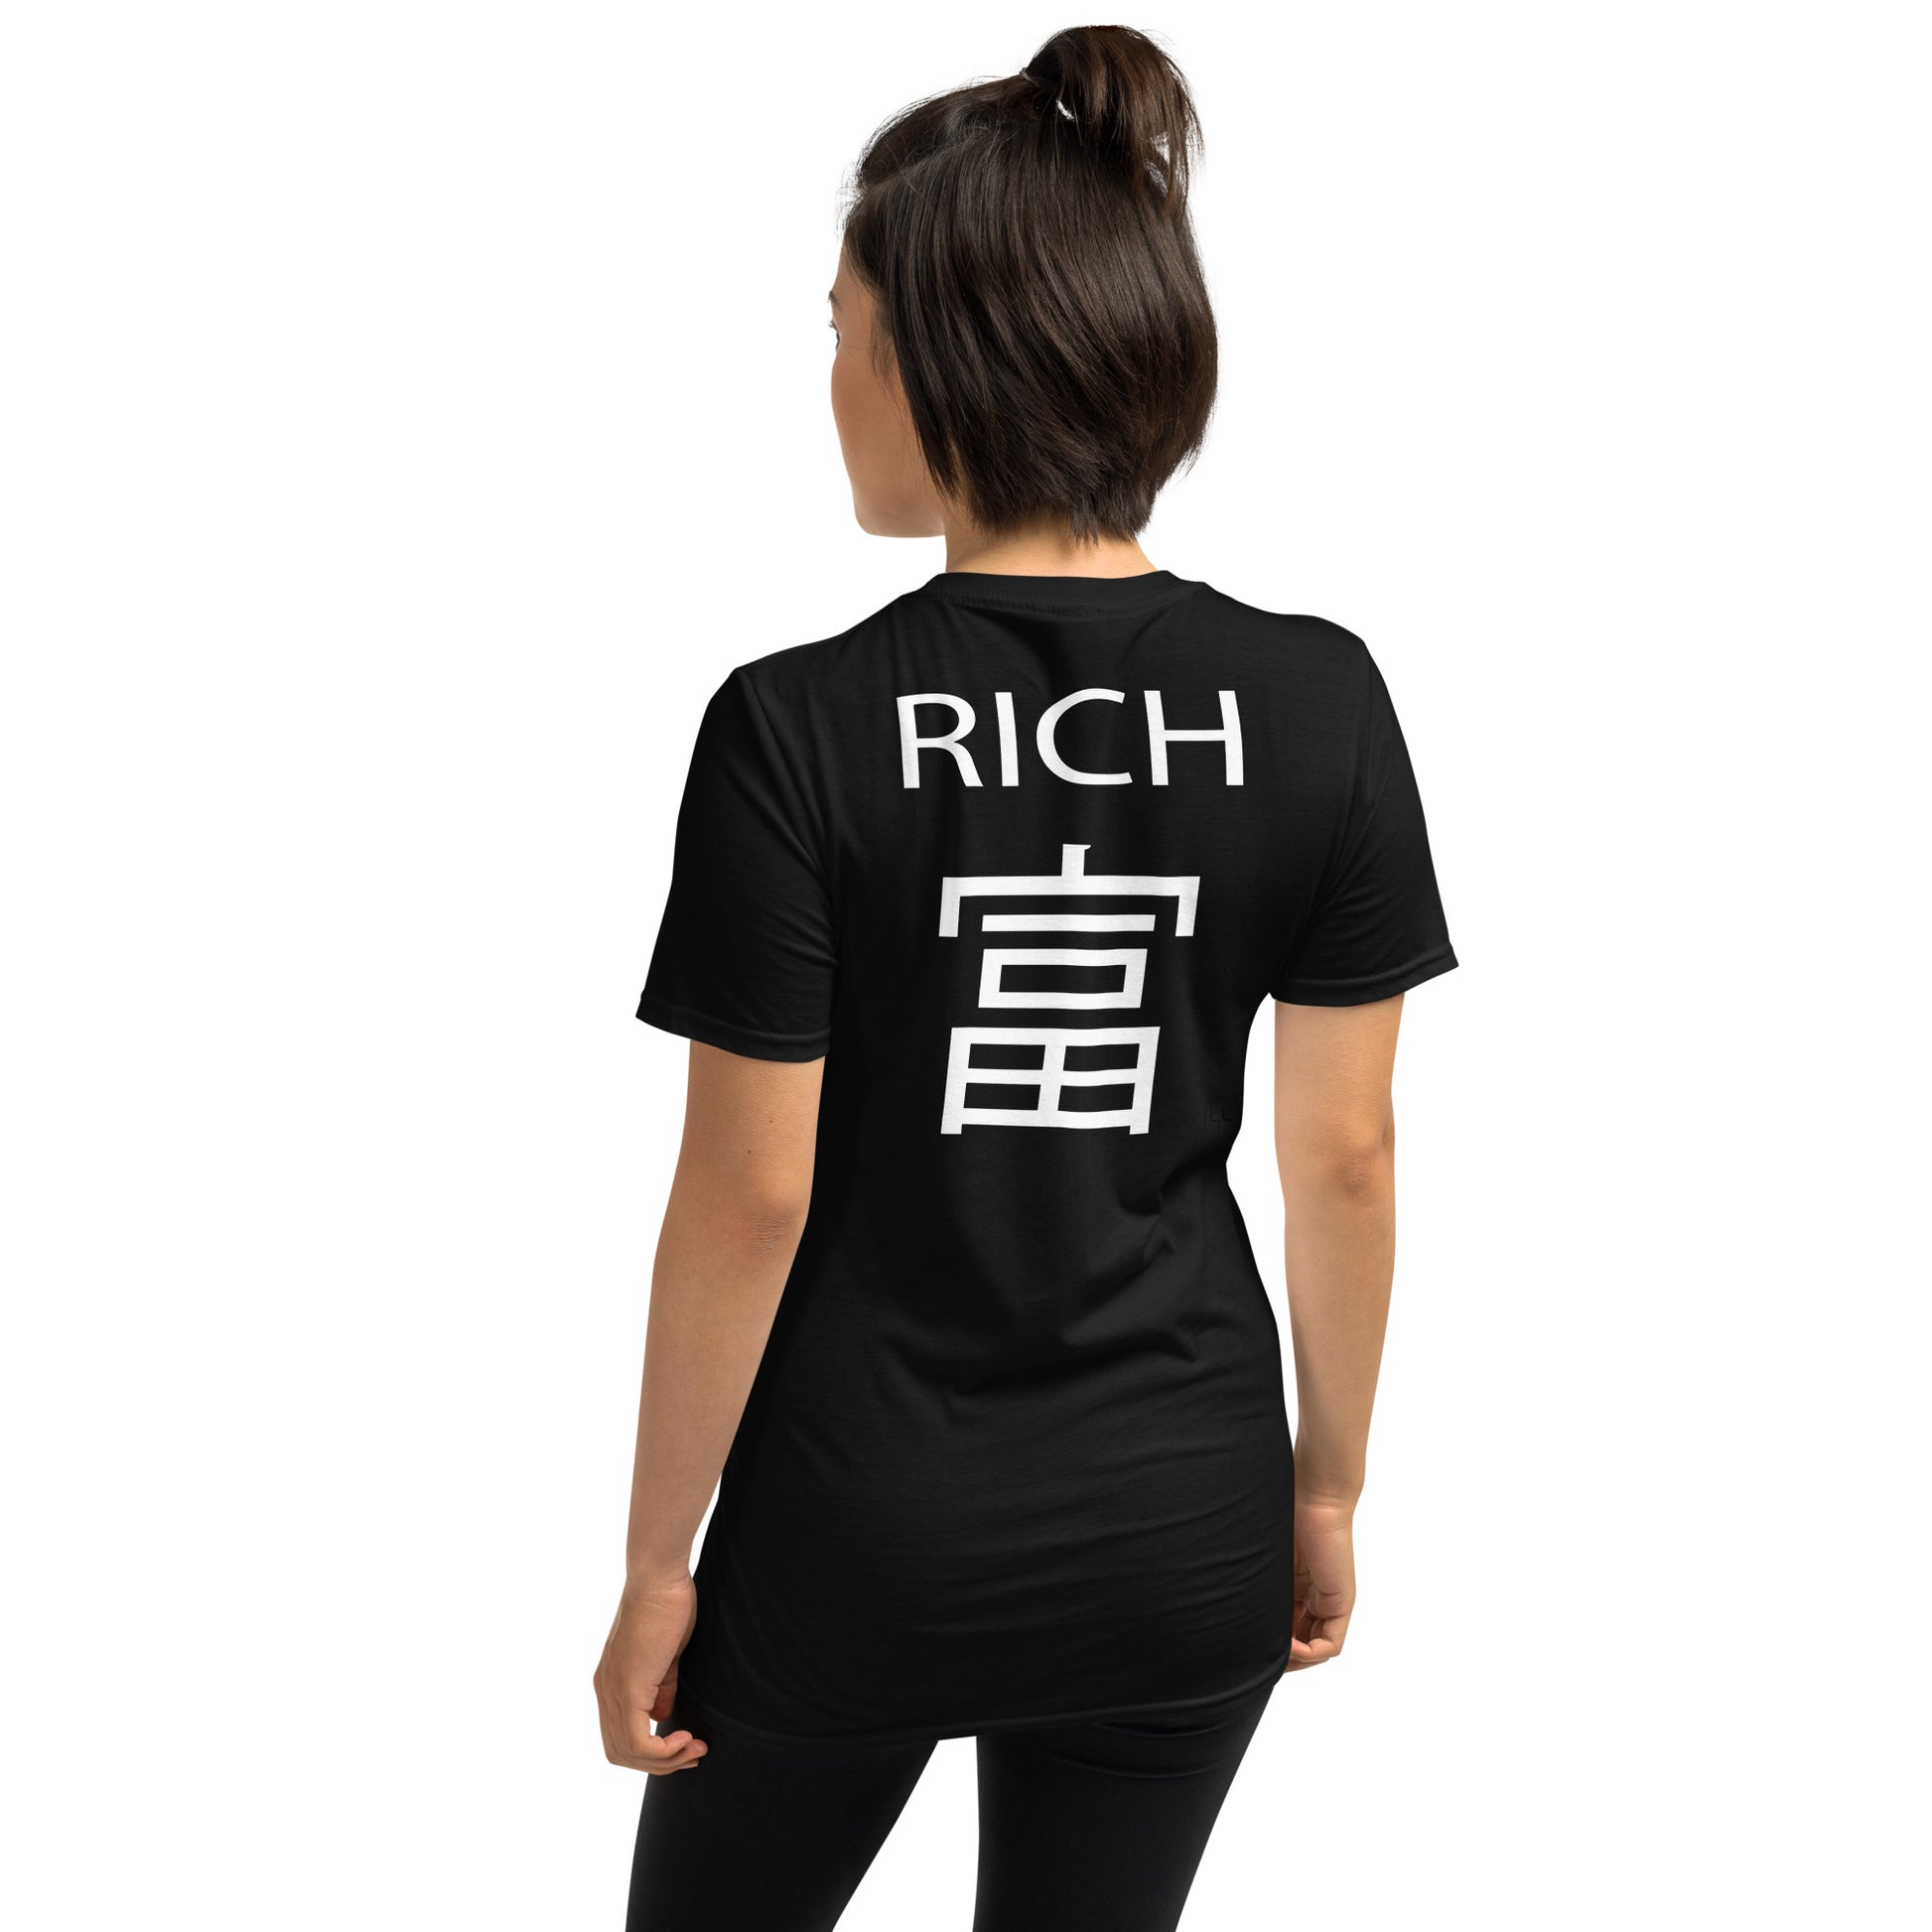 RICH Chinese Short-Sleeve Unisex T-Shirt - -Lighten Your Life [ItsAboutTime.Life][date]